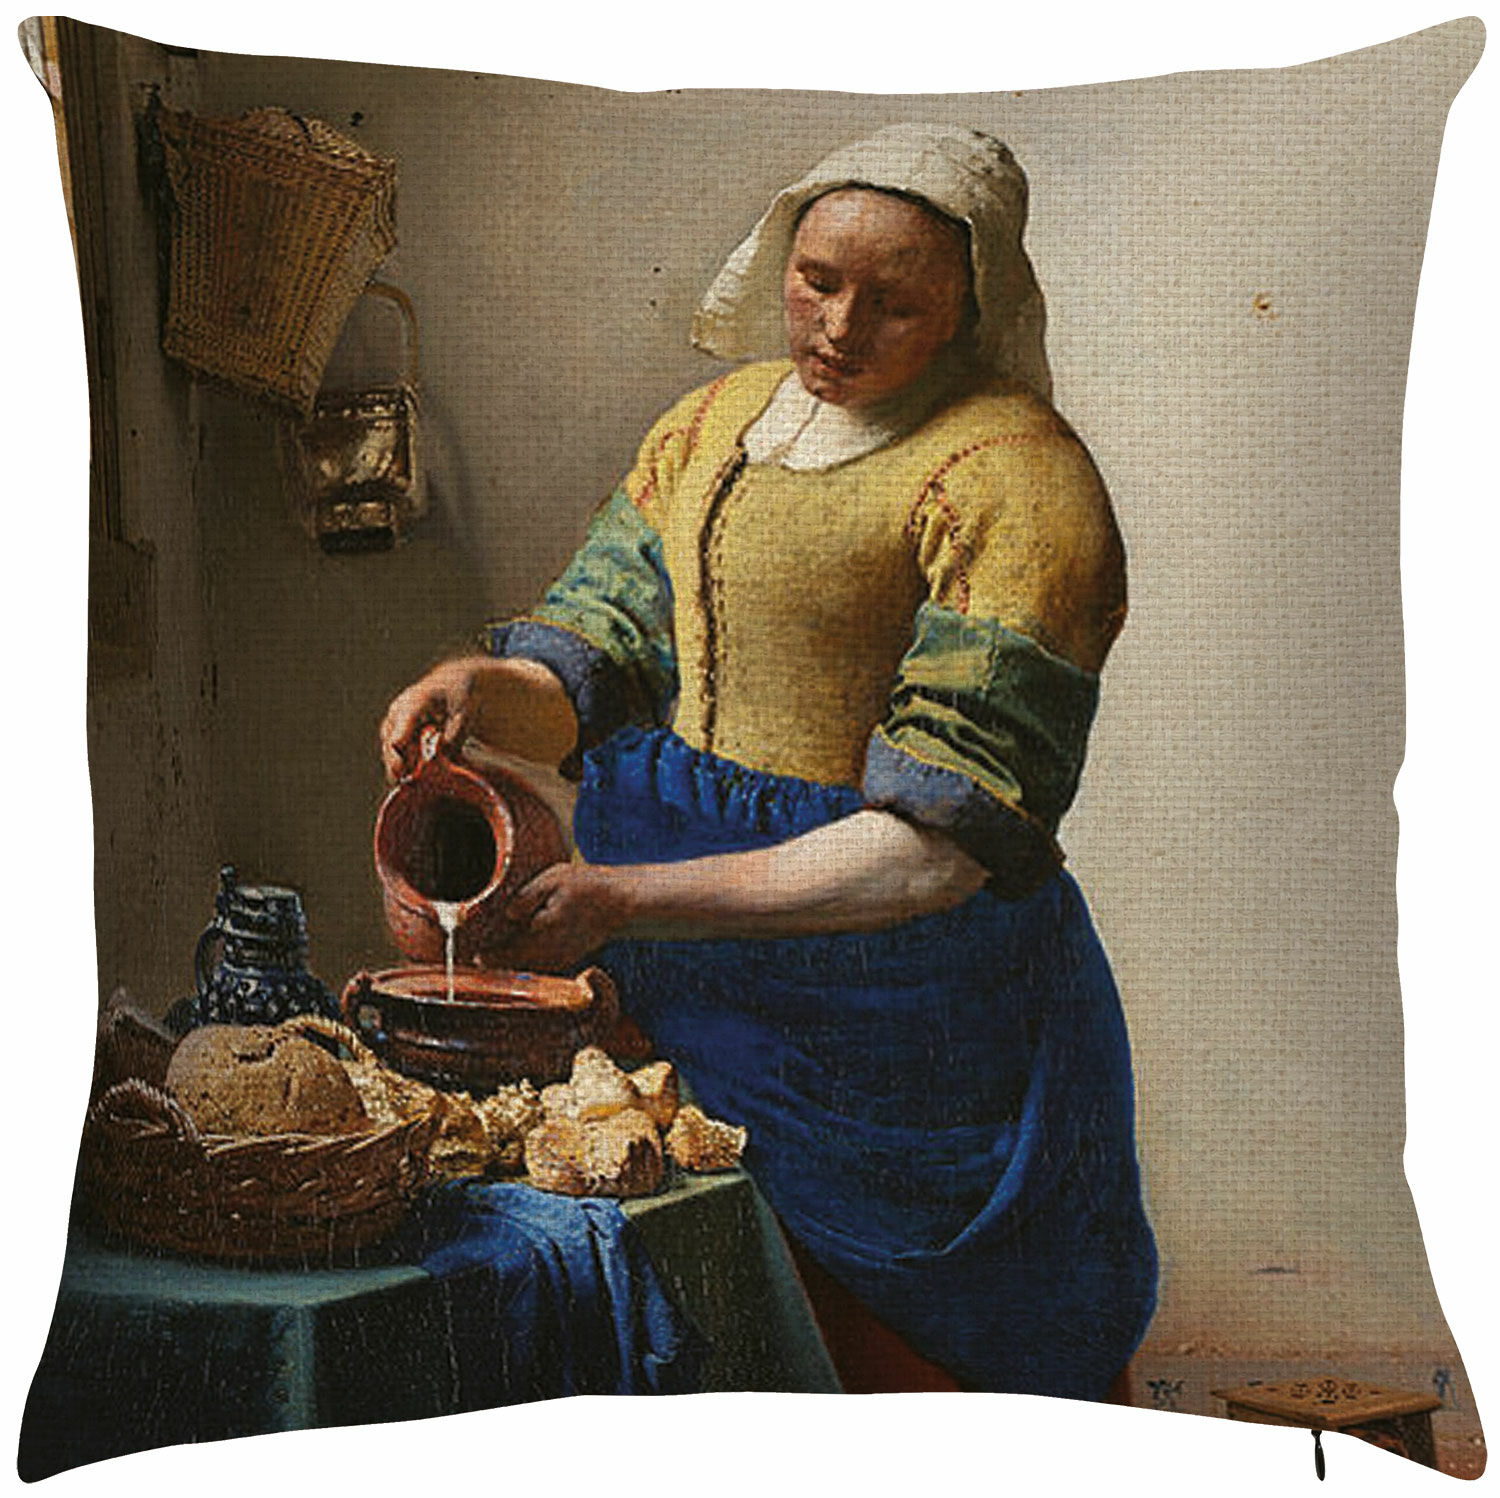 Cushion cover "Maid with Milk Jug" (1658) by Jan Vermeer van Delft